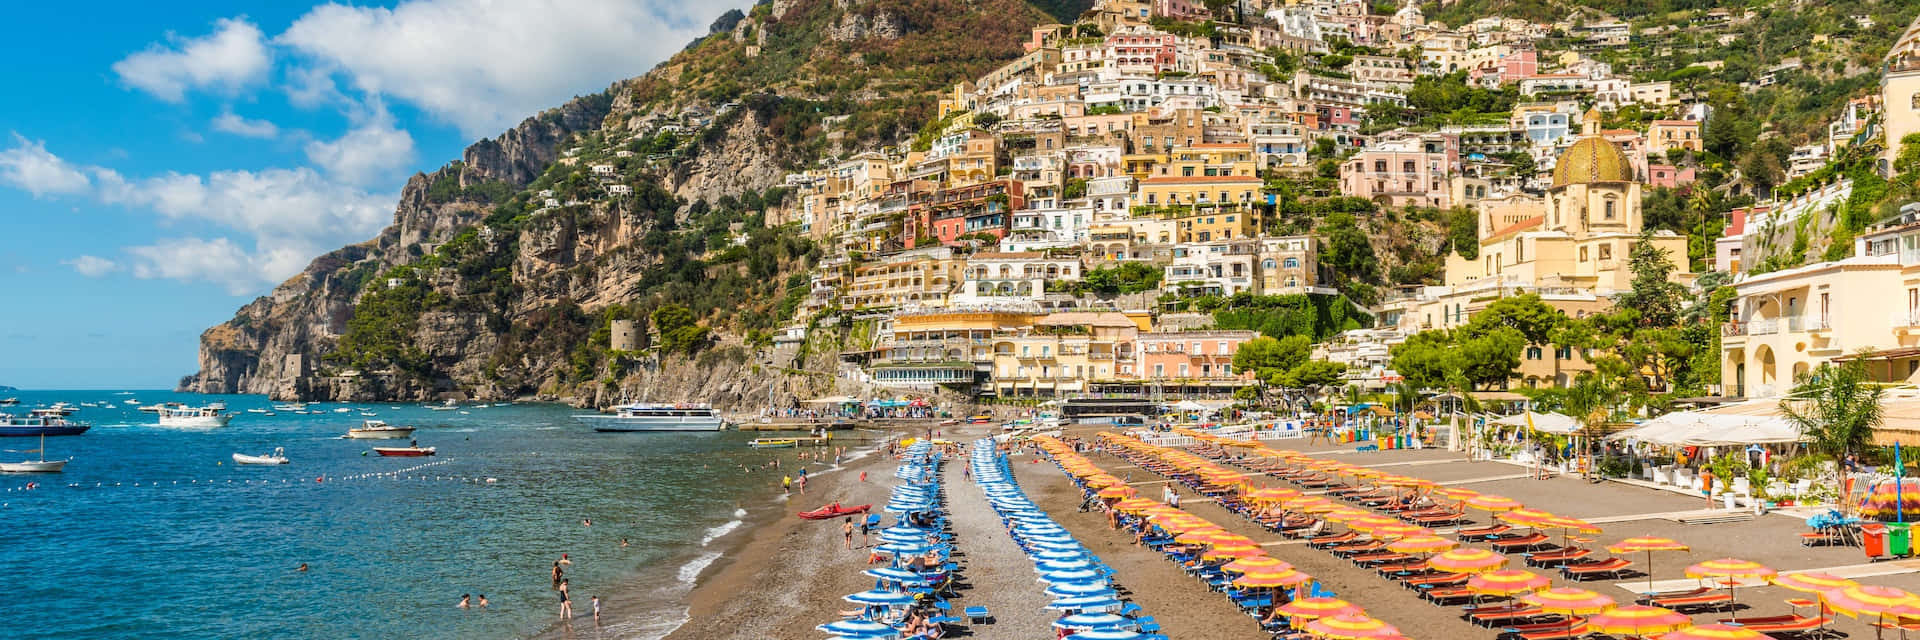 Breathtaking view of an idyllic Italian island Wallpaper